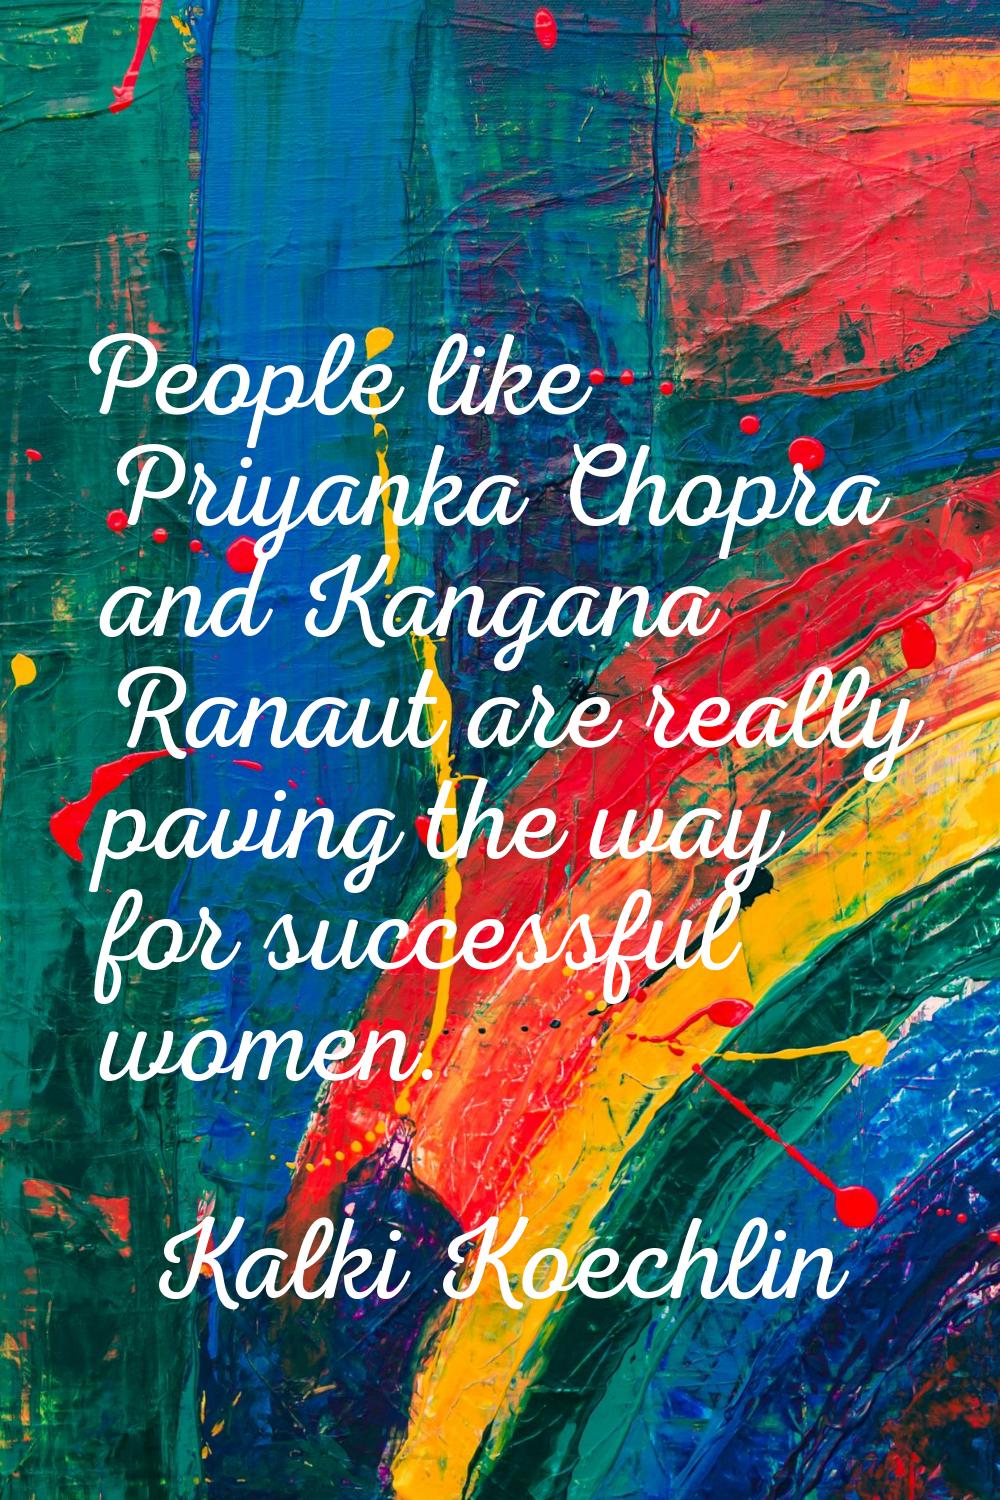 People like Priyanka Chopra and Kangana Ranaut are really paving the way for successful women.